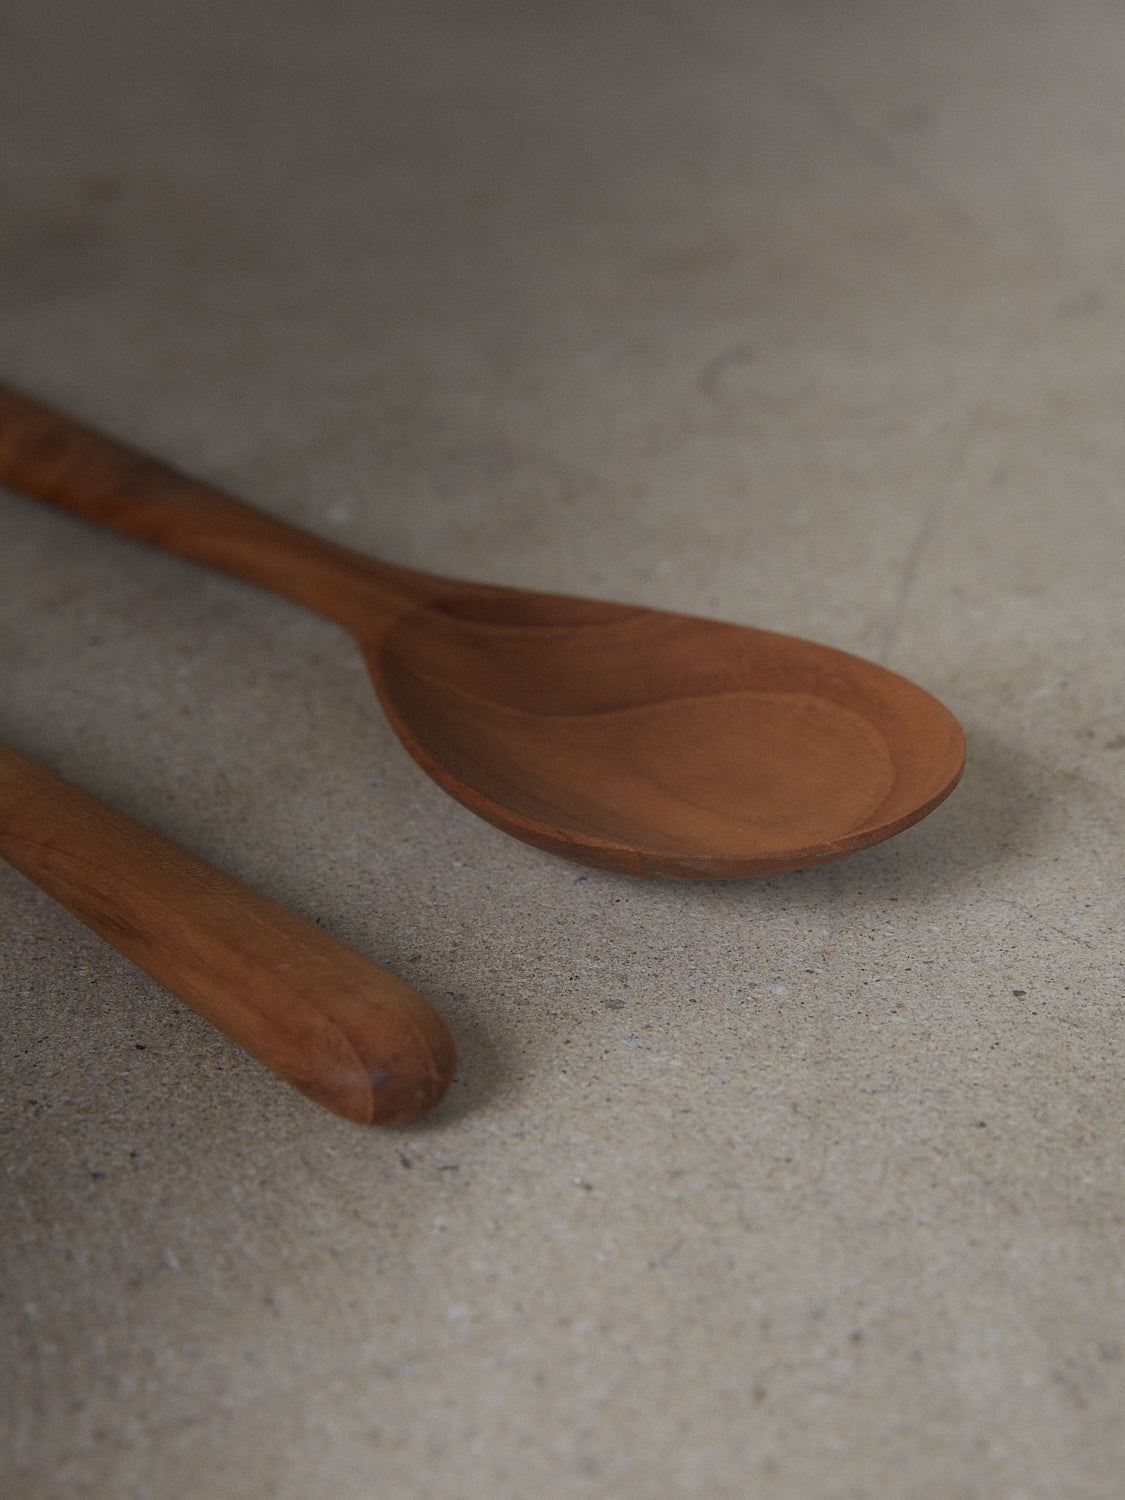 Pair of minimalist utensils for serving salad in natural teak wood.